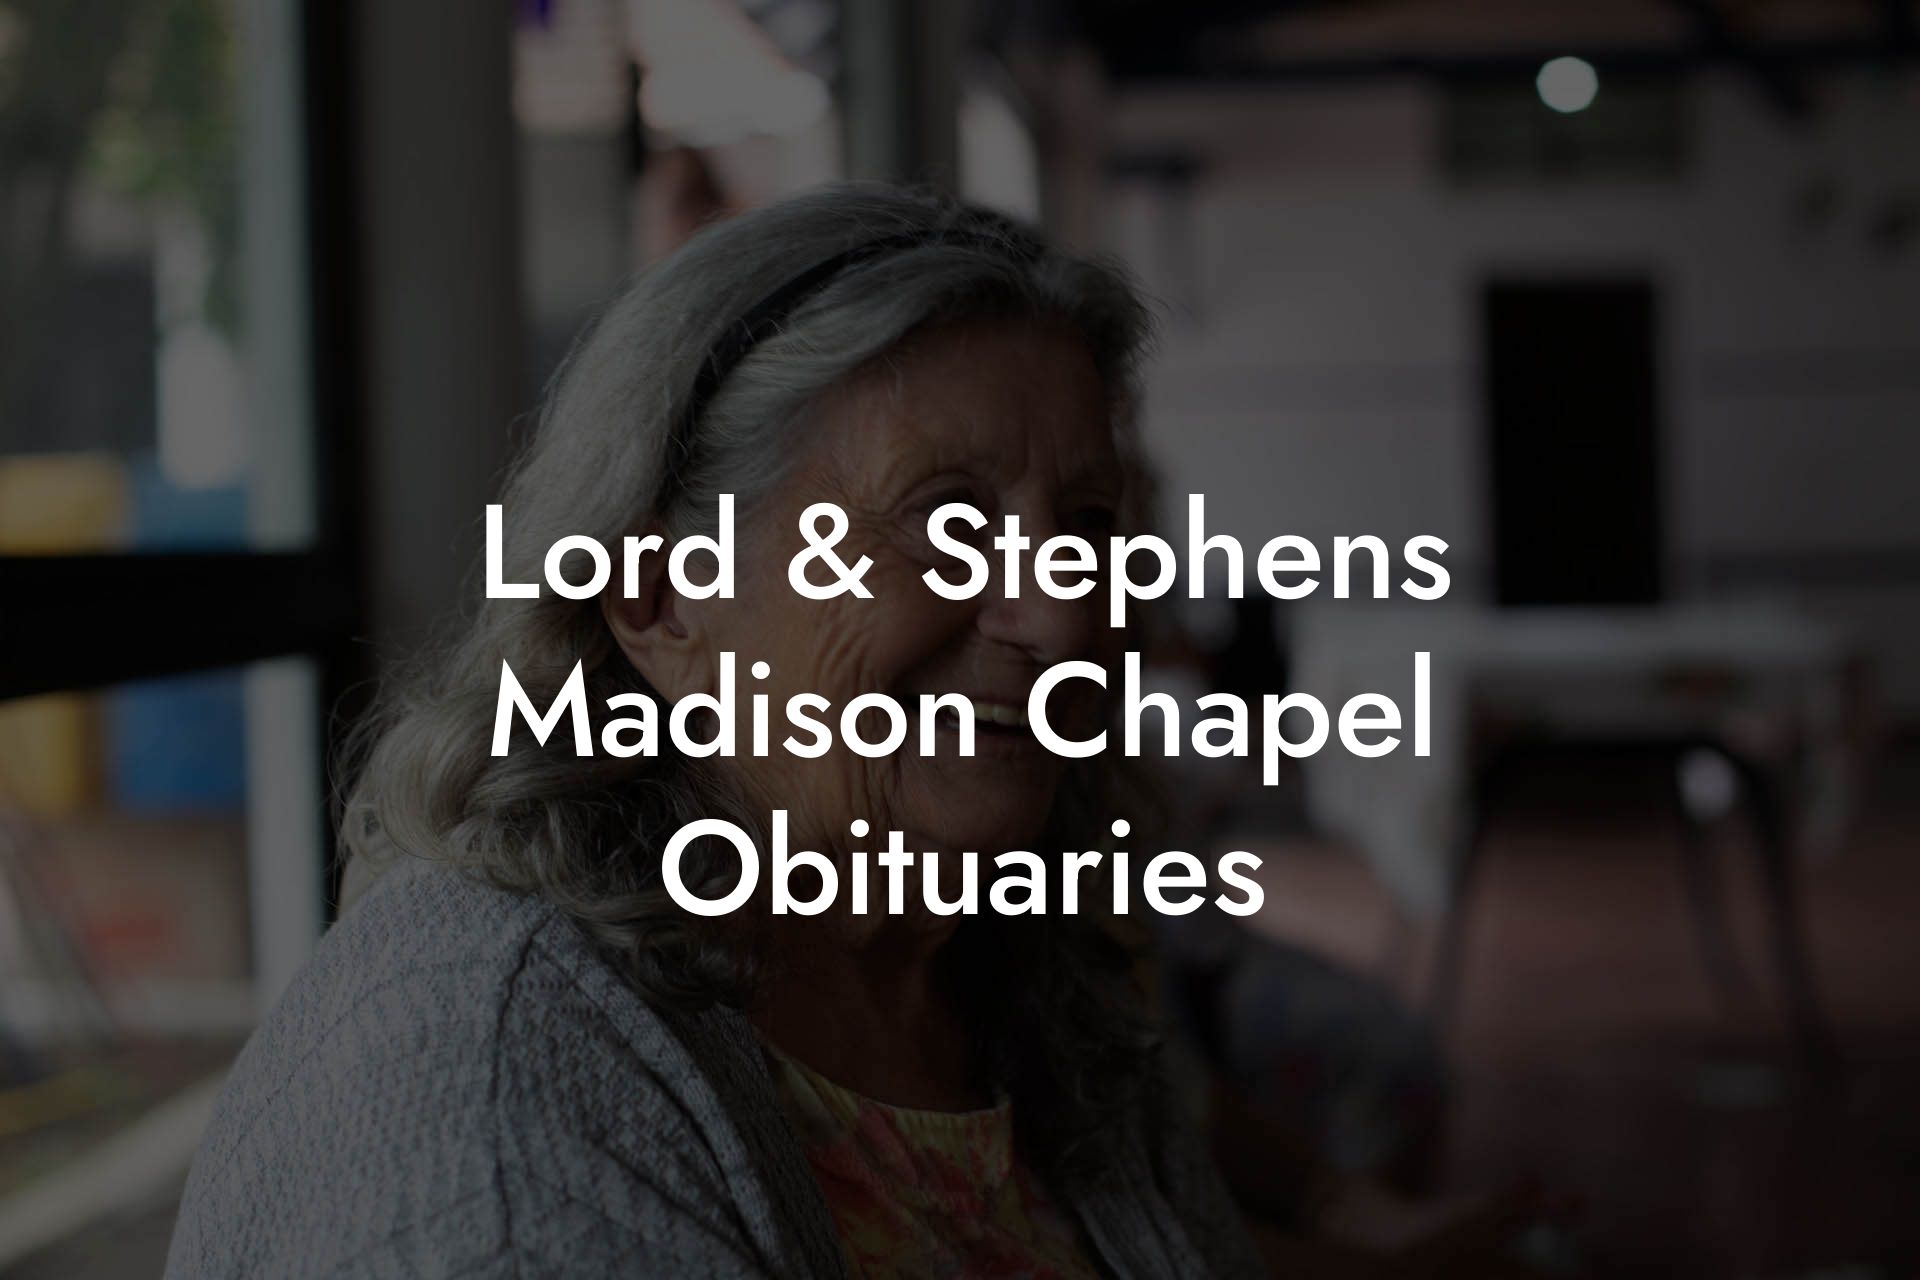 Lord & Stephens Madison Chapel Obituaries